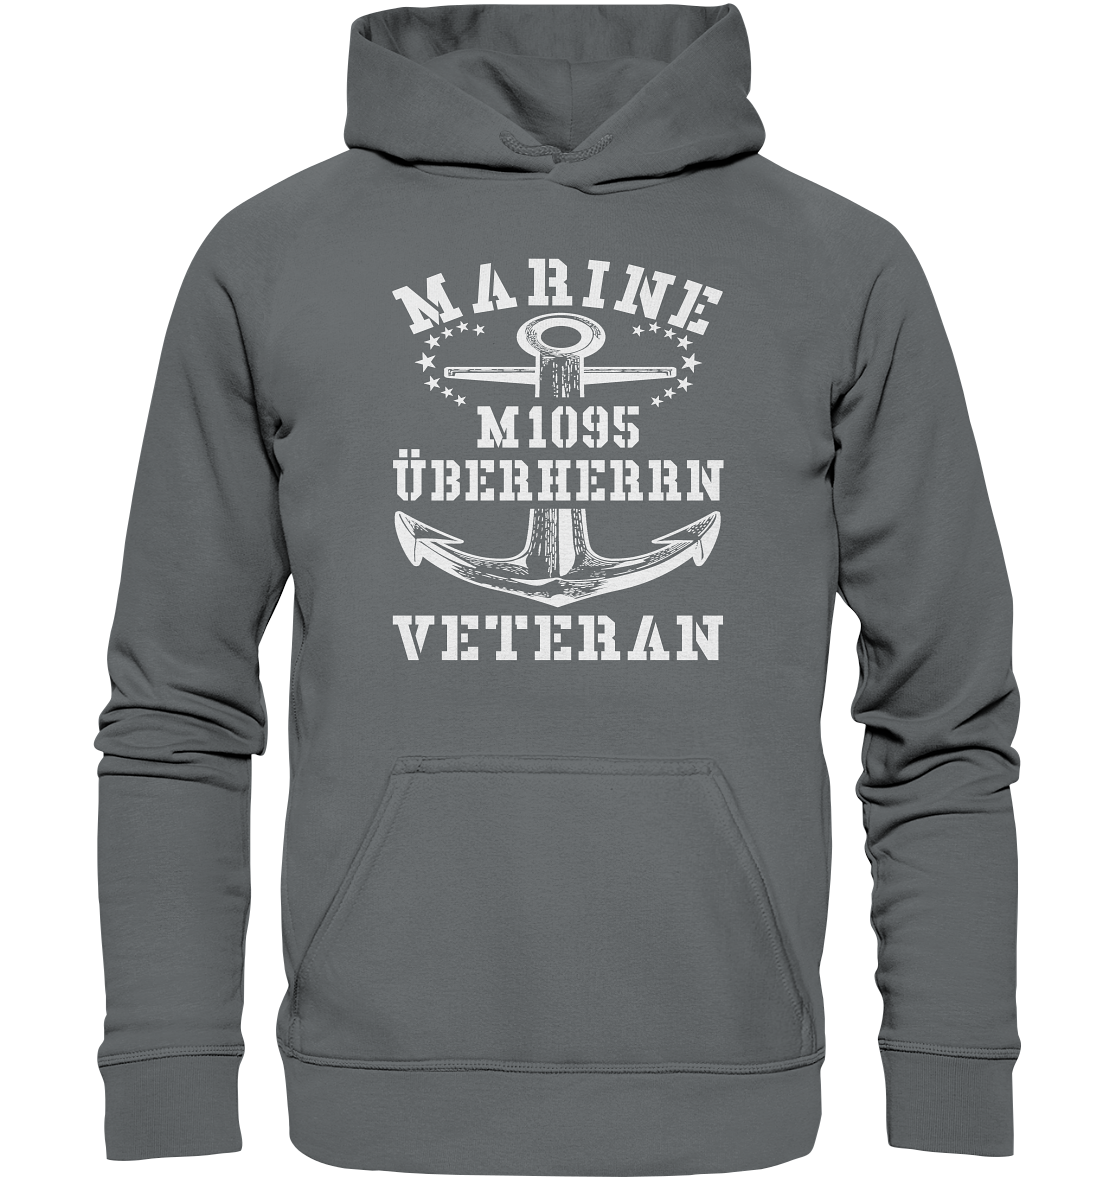 M1095 ÜBERHERRN Marine Veteran - Basic Unisex Hoodie